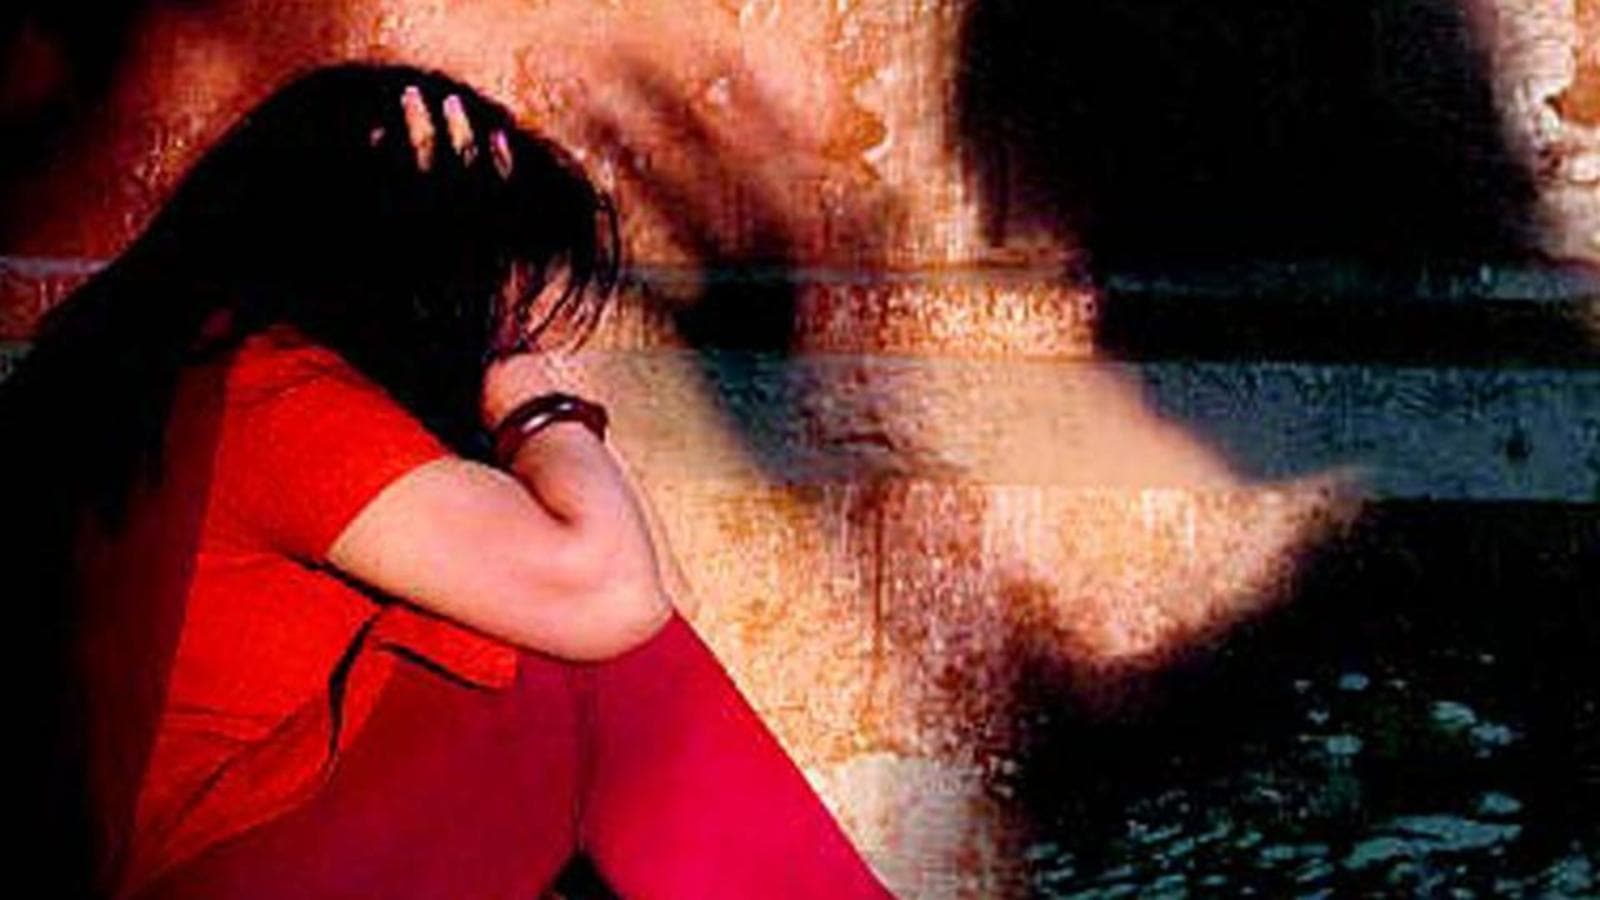 Chaina Girl Rape Video Download - Kerala model gang-raped in Kochi, one arrested: Police | Latest News India  - Hindustan Times